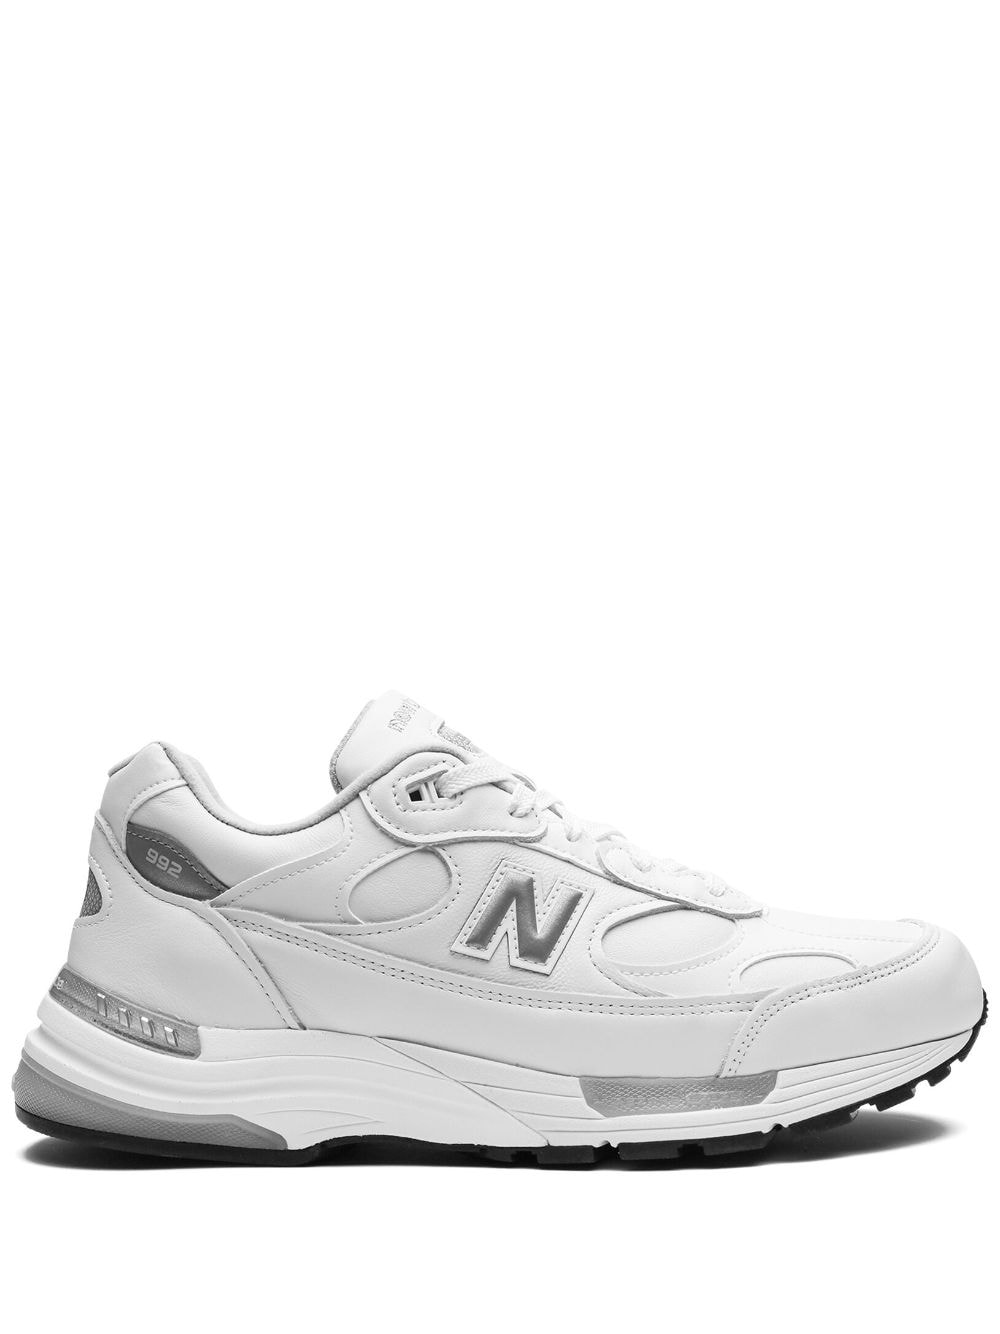 New Balance 992 "miusa White/silver" Sneakers